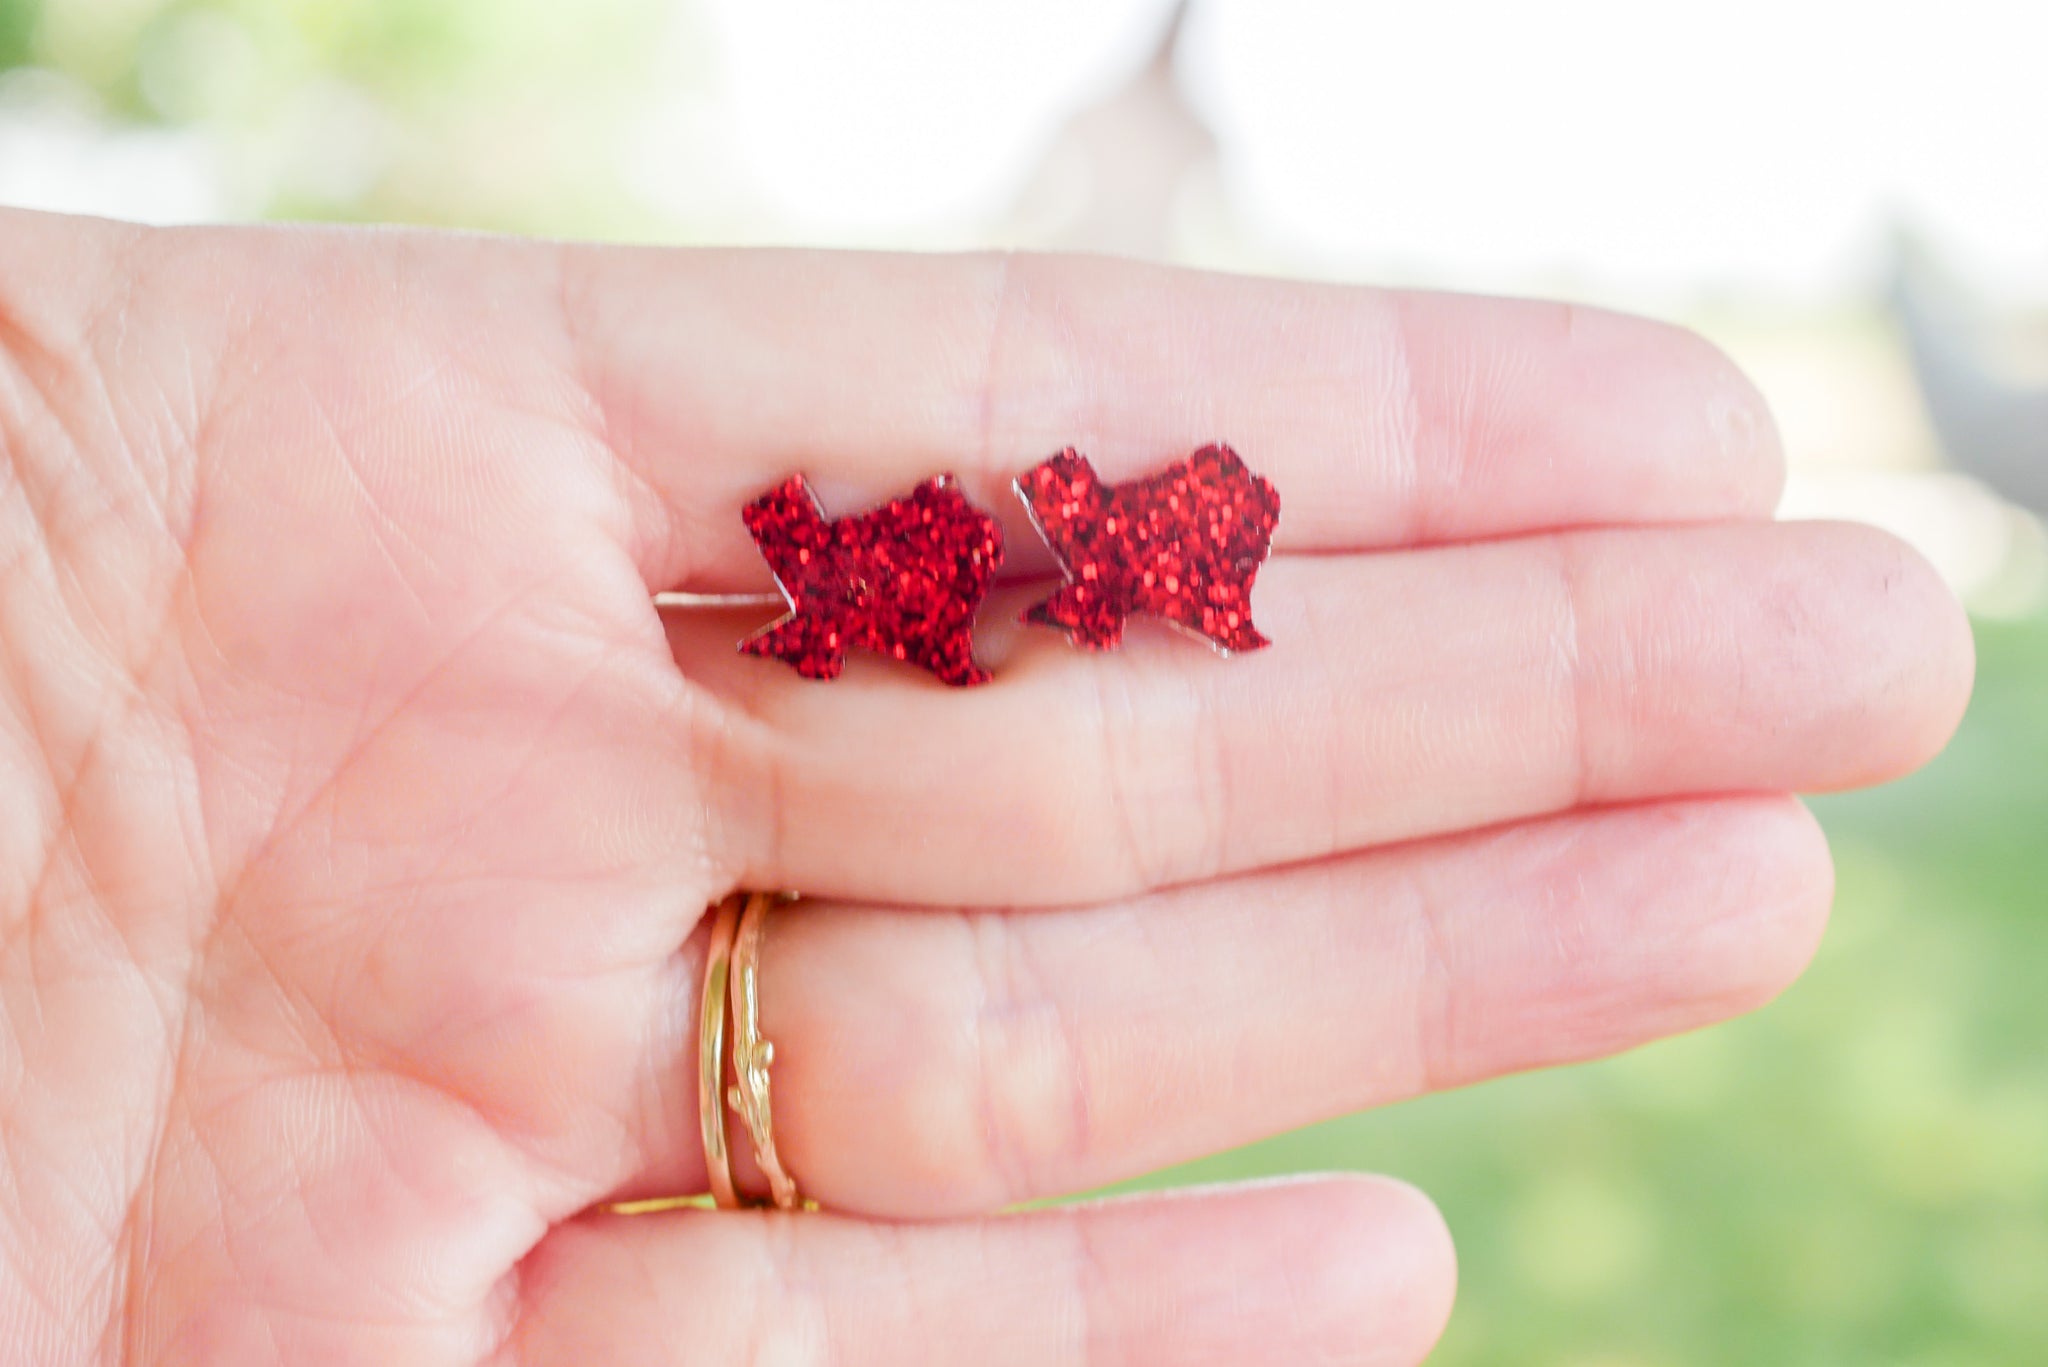 Tiny Texas red glitter studs